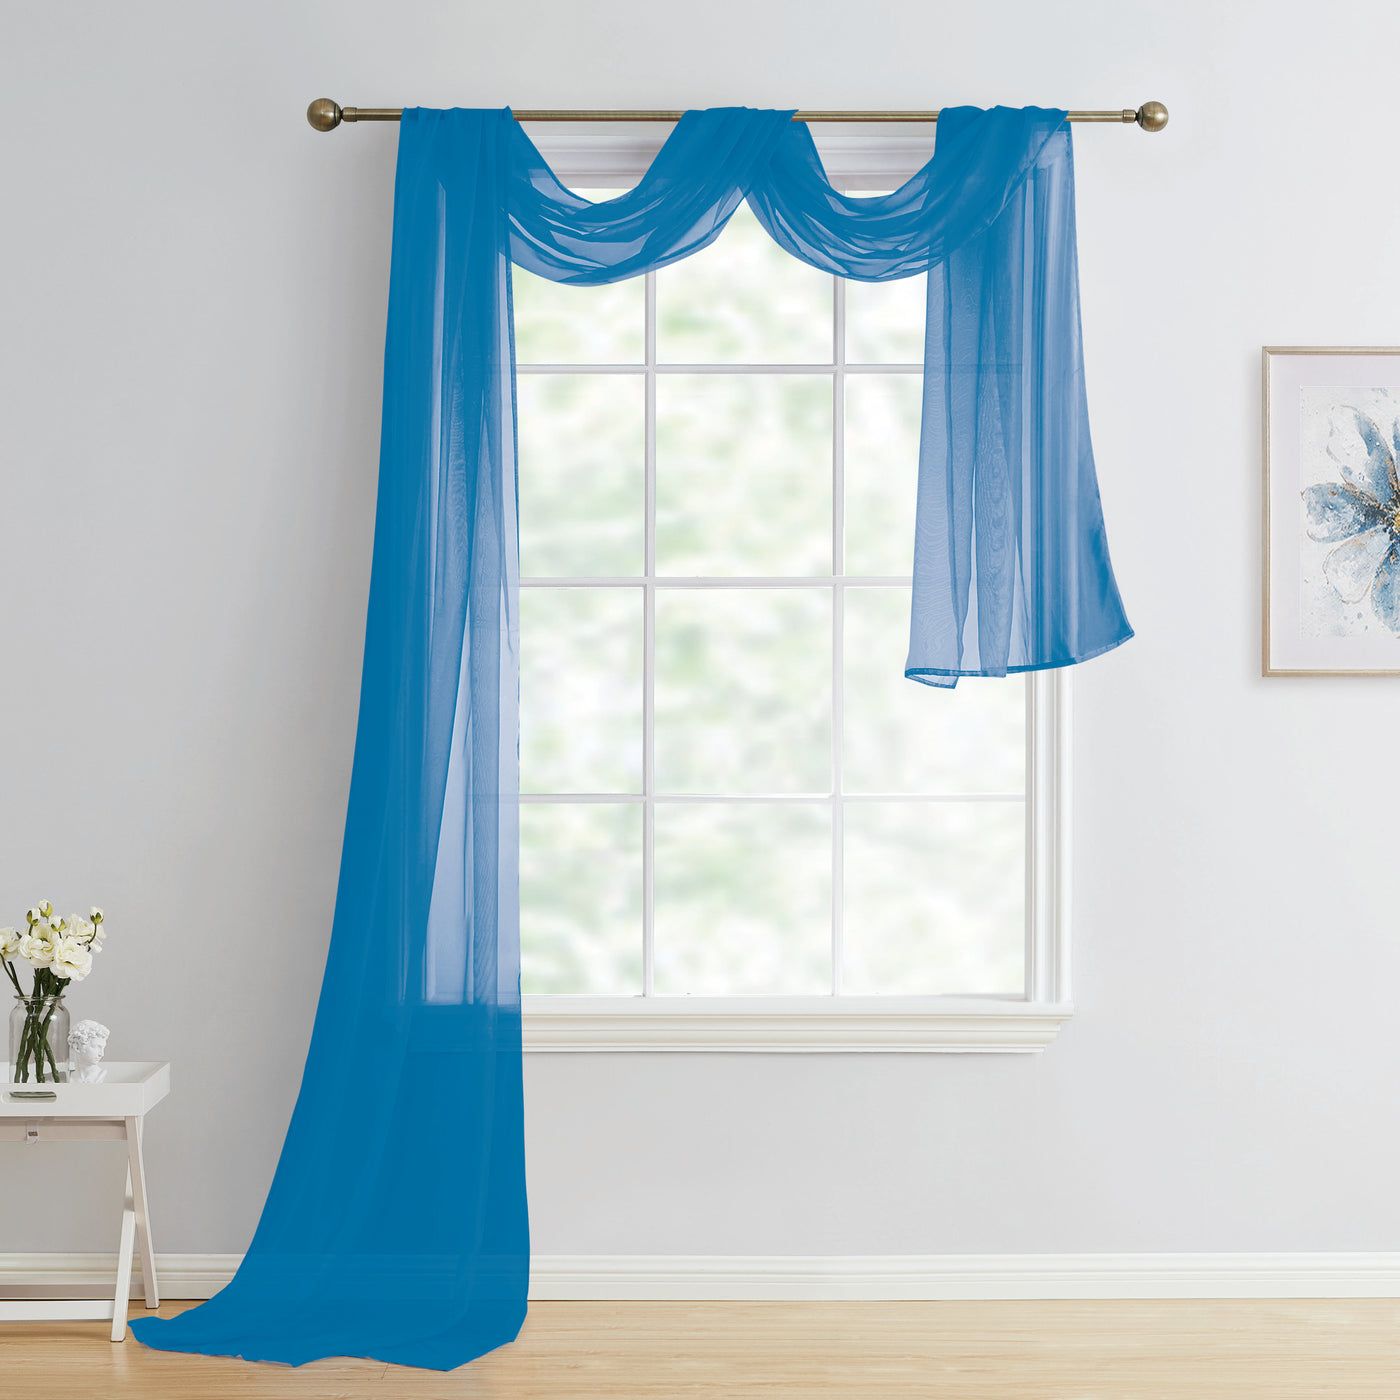 Solid Sheer Scarf For Window Treatment Decorative Wedding Valance Curtain 37 x 216" | Jenin Home Furnishing.